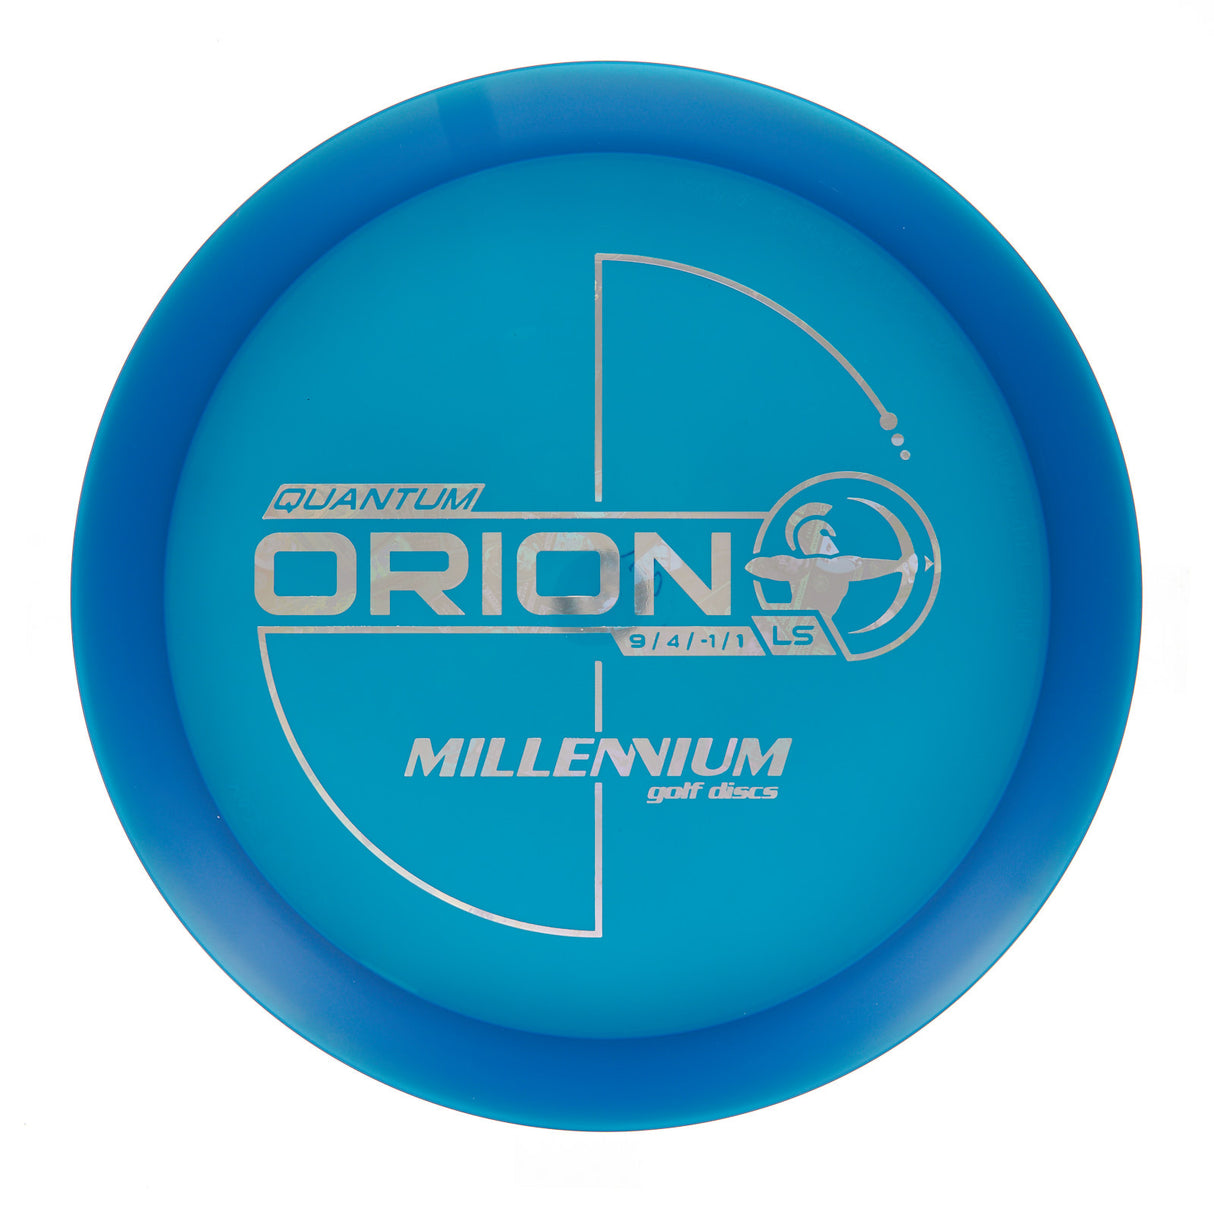 Millennium Orion LS - Quantum  169g | Style 0001